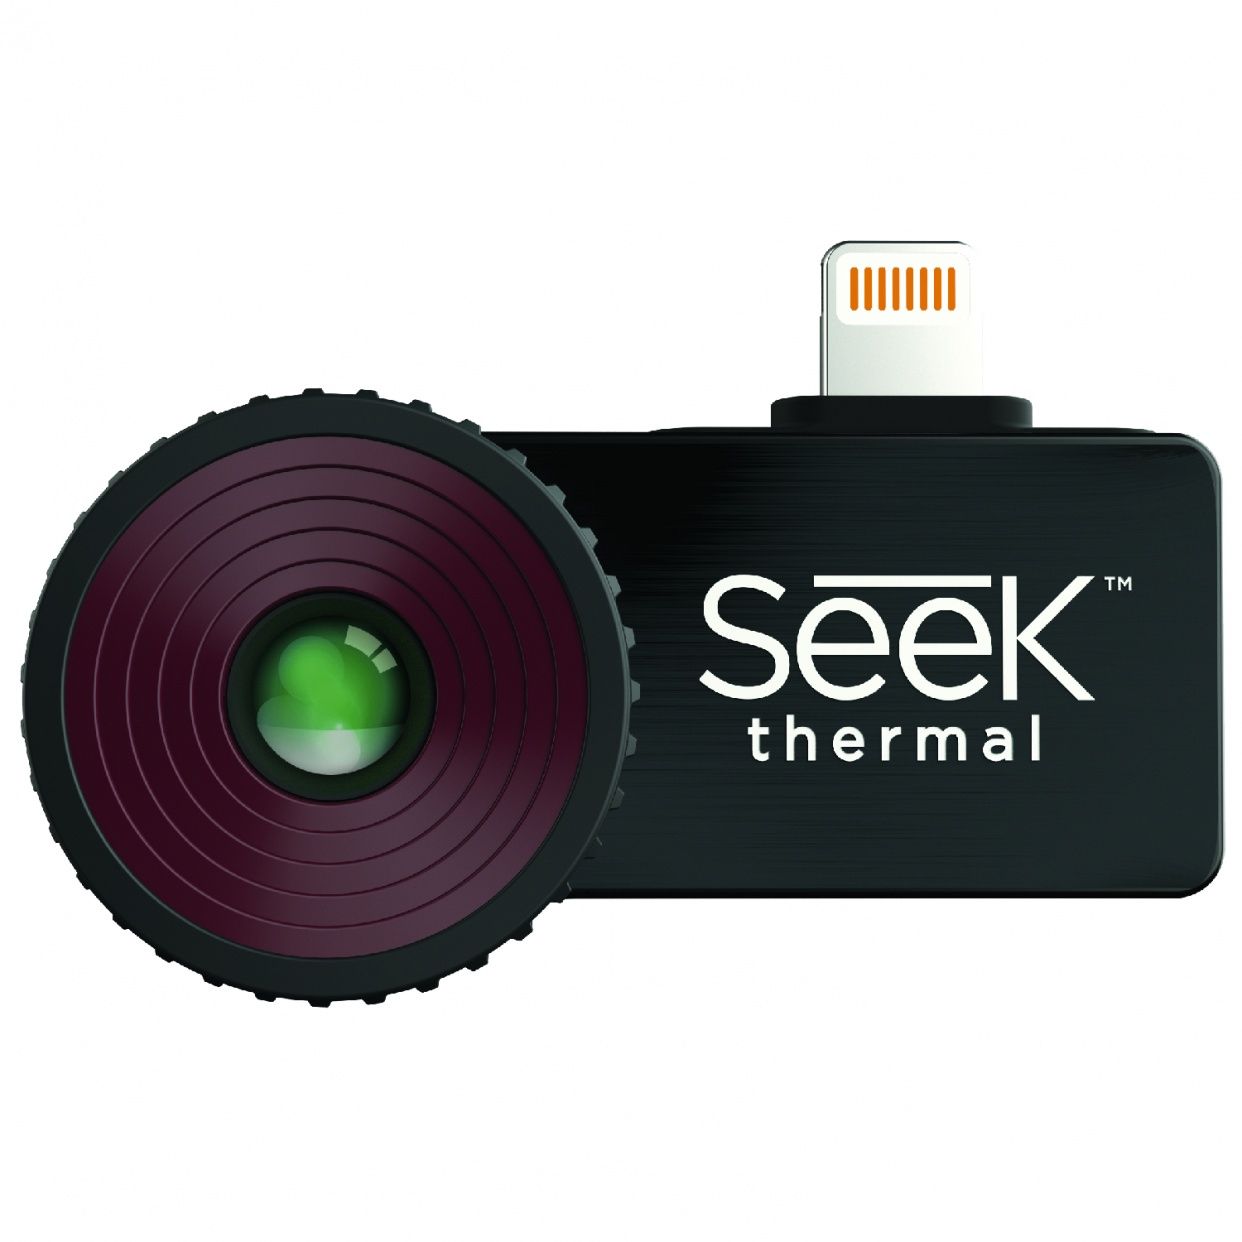 Seek Thermal LQ-AAAX thermal imaging camera Black Vanadium Oxide Uncooled Focal Plane Arrays 320 x 240 pixels_6